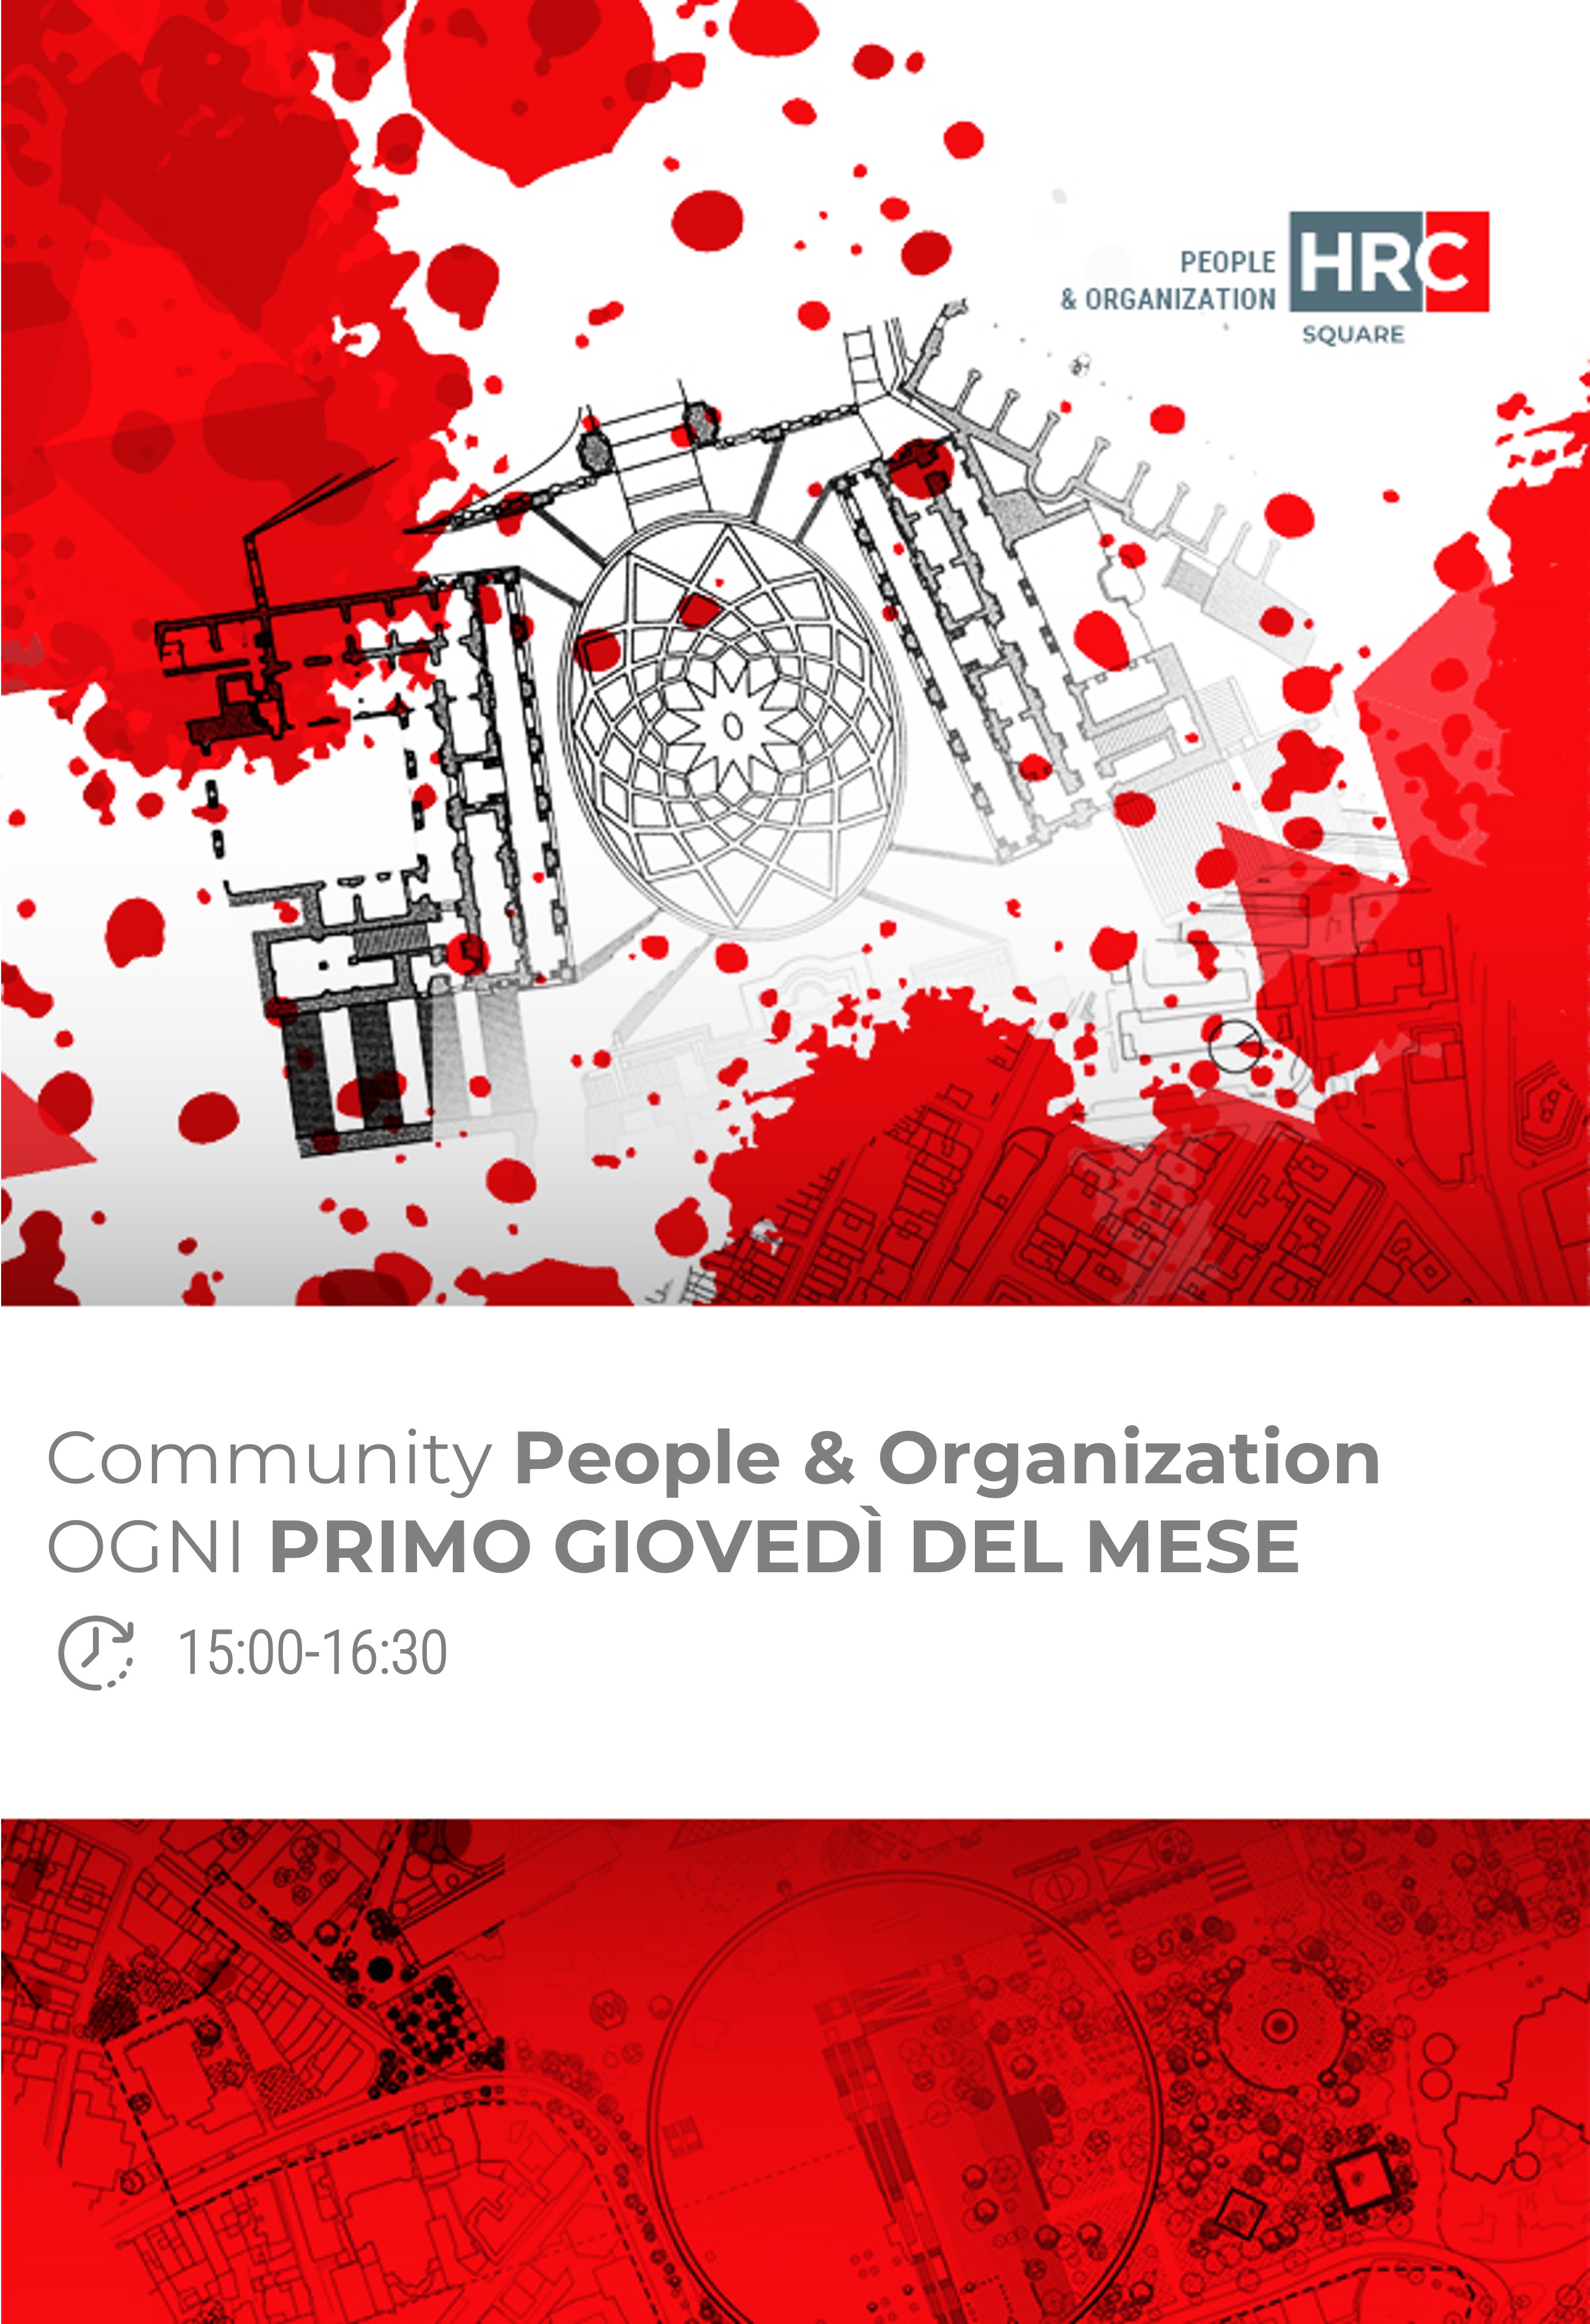 People & Organization